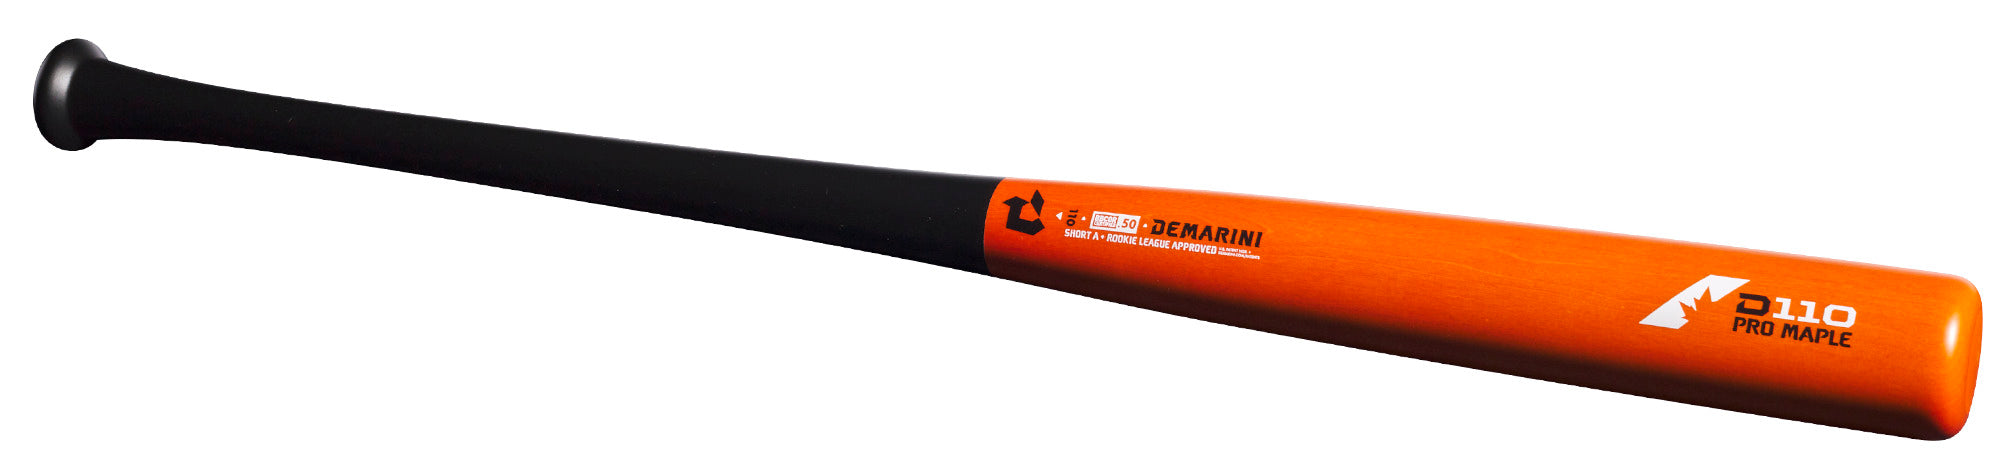 Demarini D110 Pro Maple Wood Composite Baseball Bat